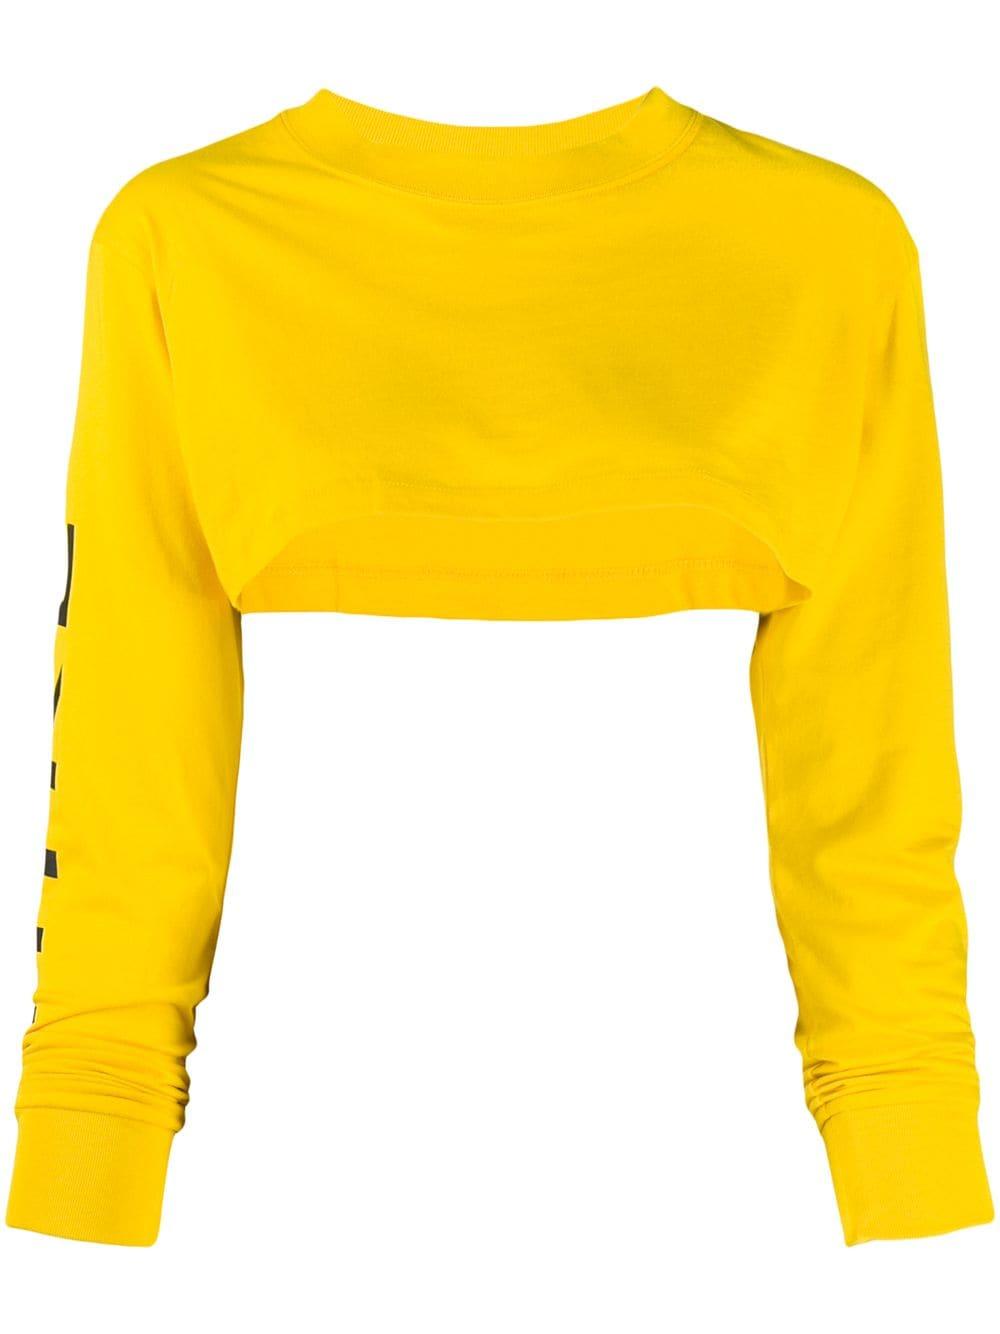 Nike Logo Print Super Crop Top in Yellow | Lyst